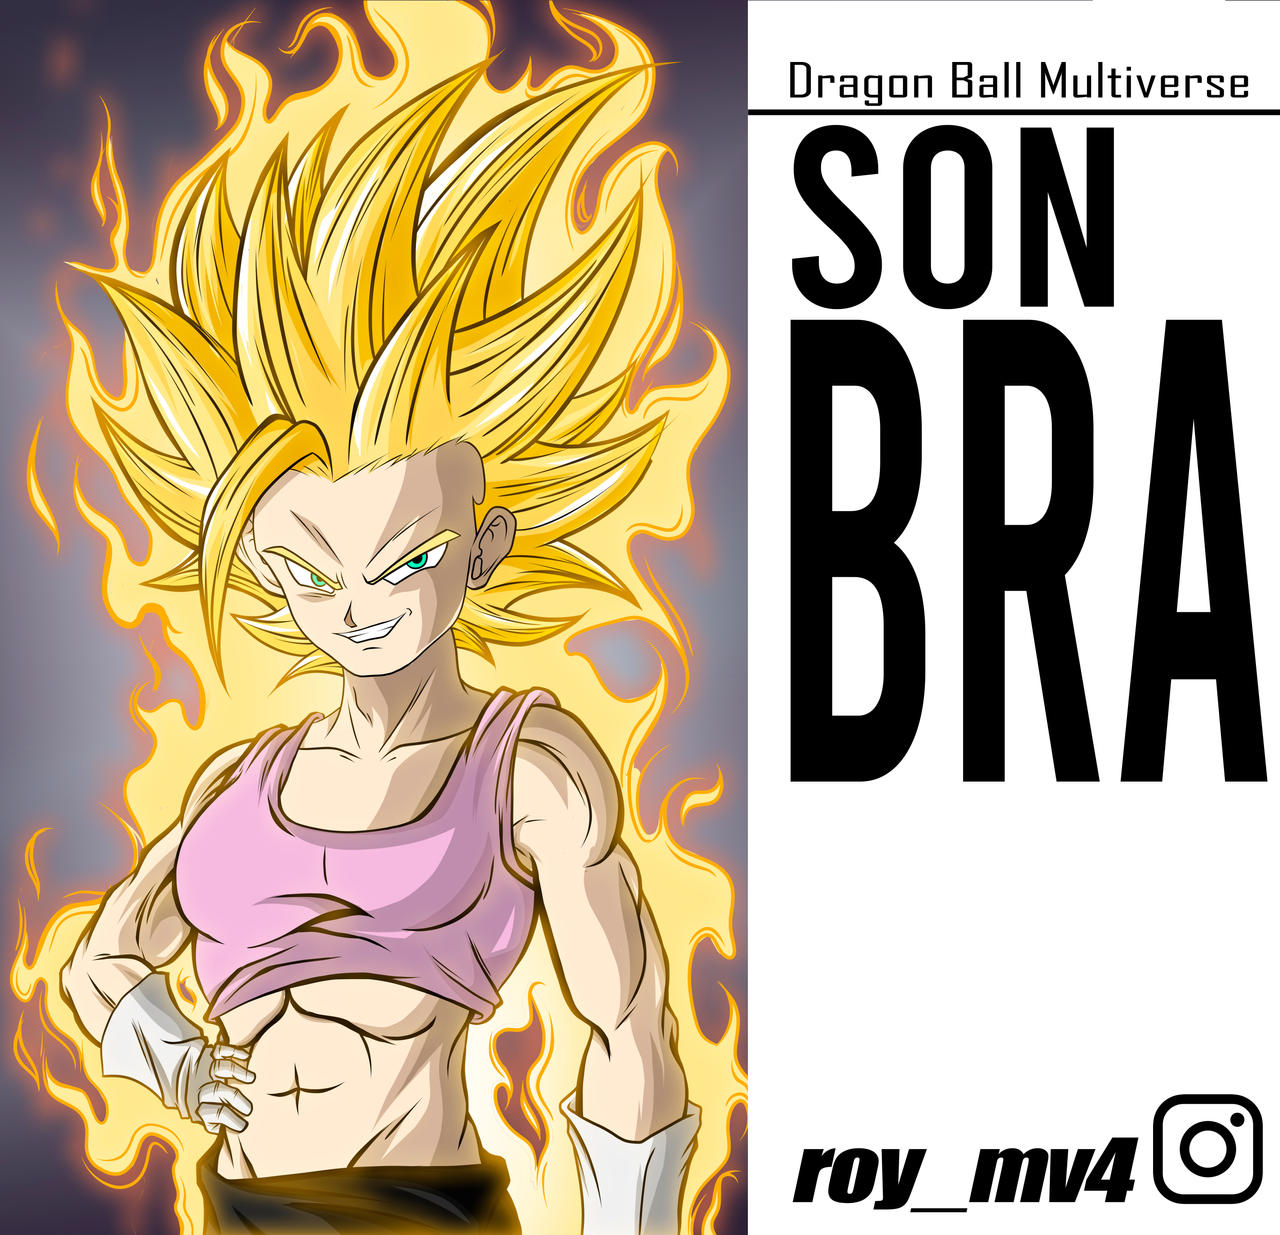 I made Son Bra from Dragon Ball Multiverse in 3D (OC) : r/dbz